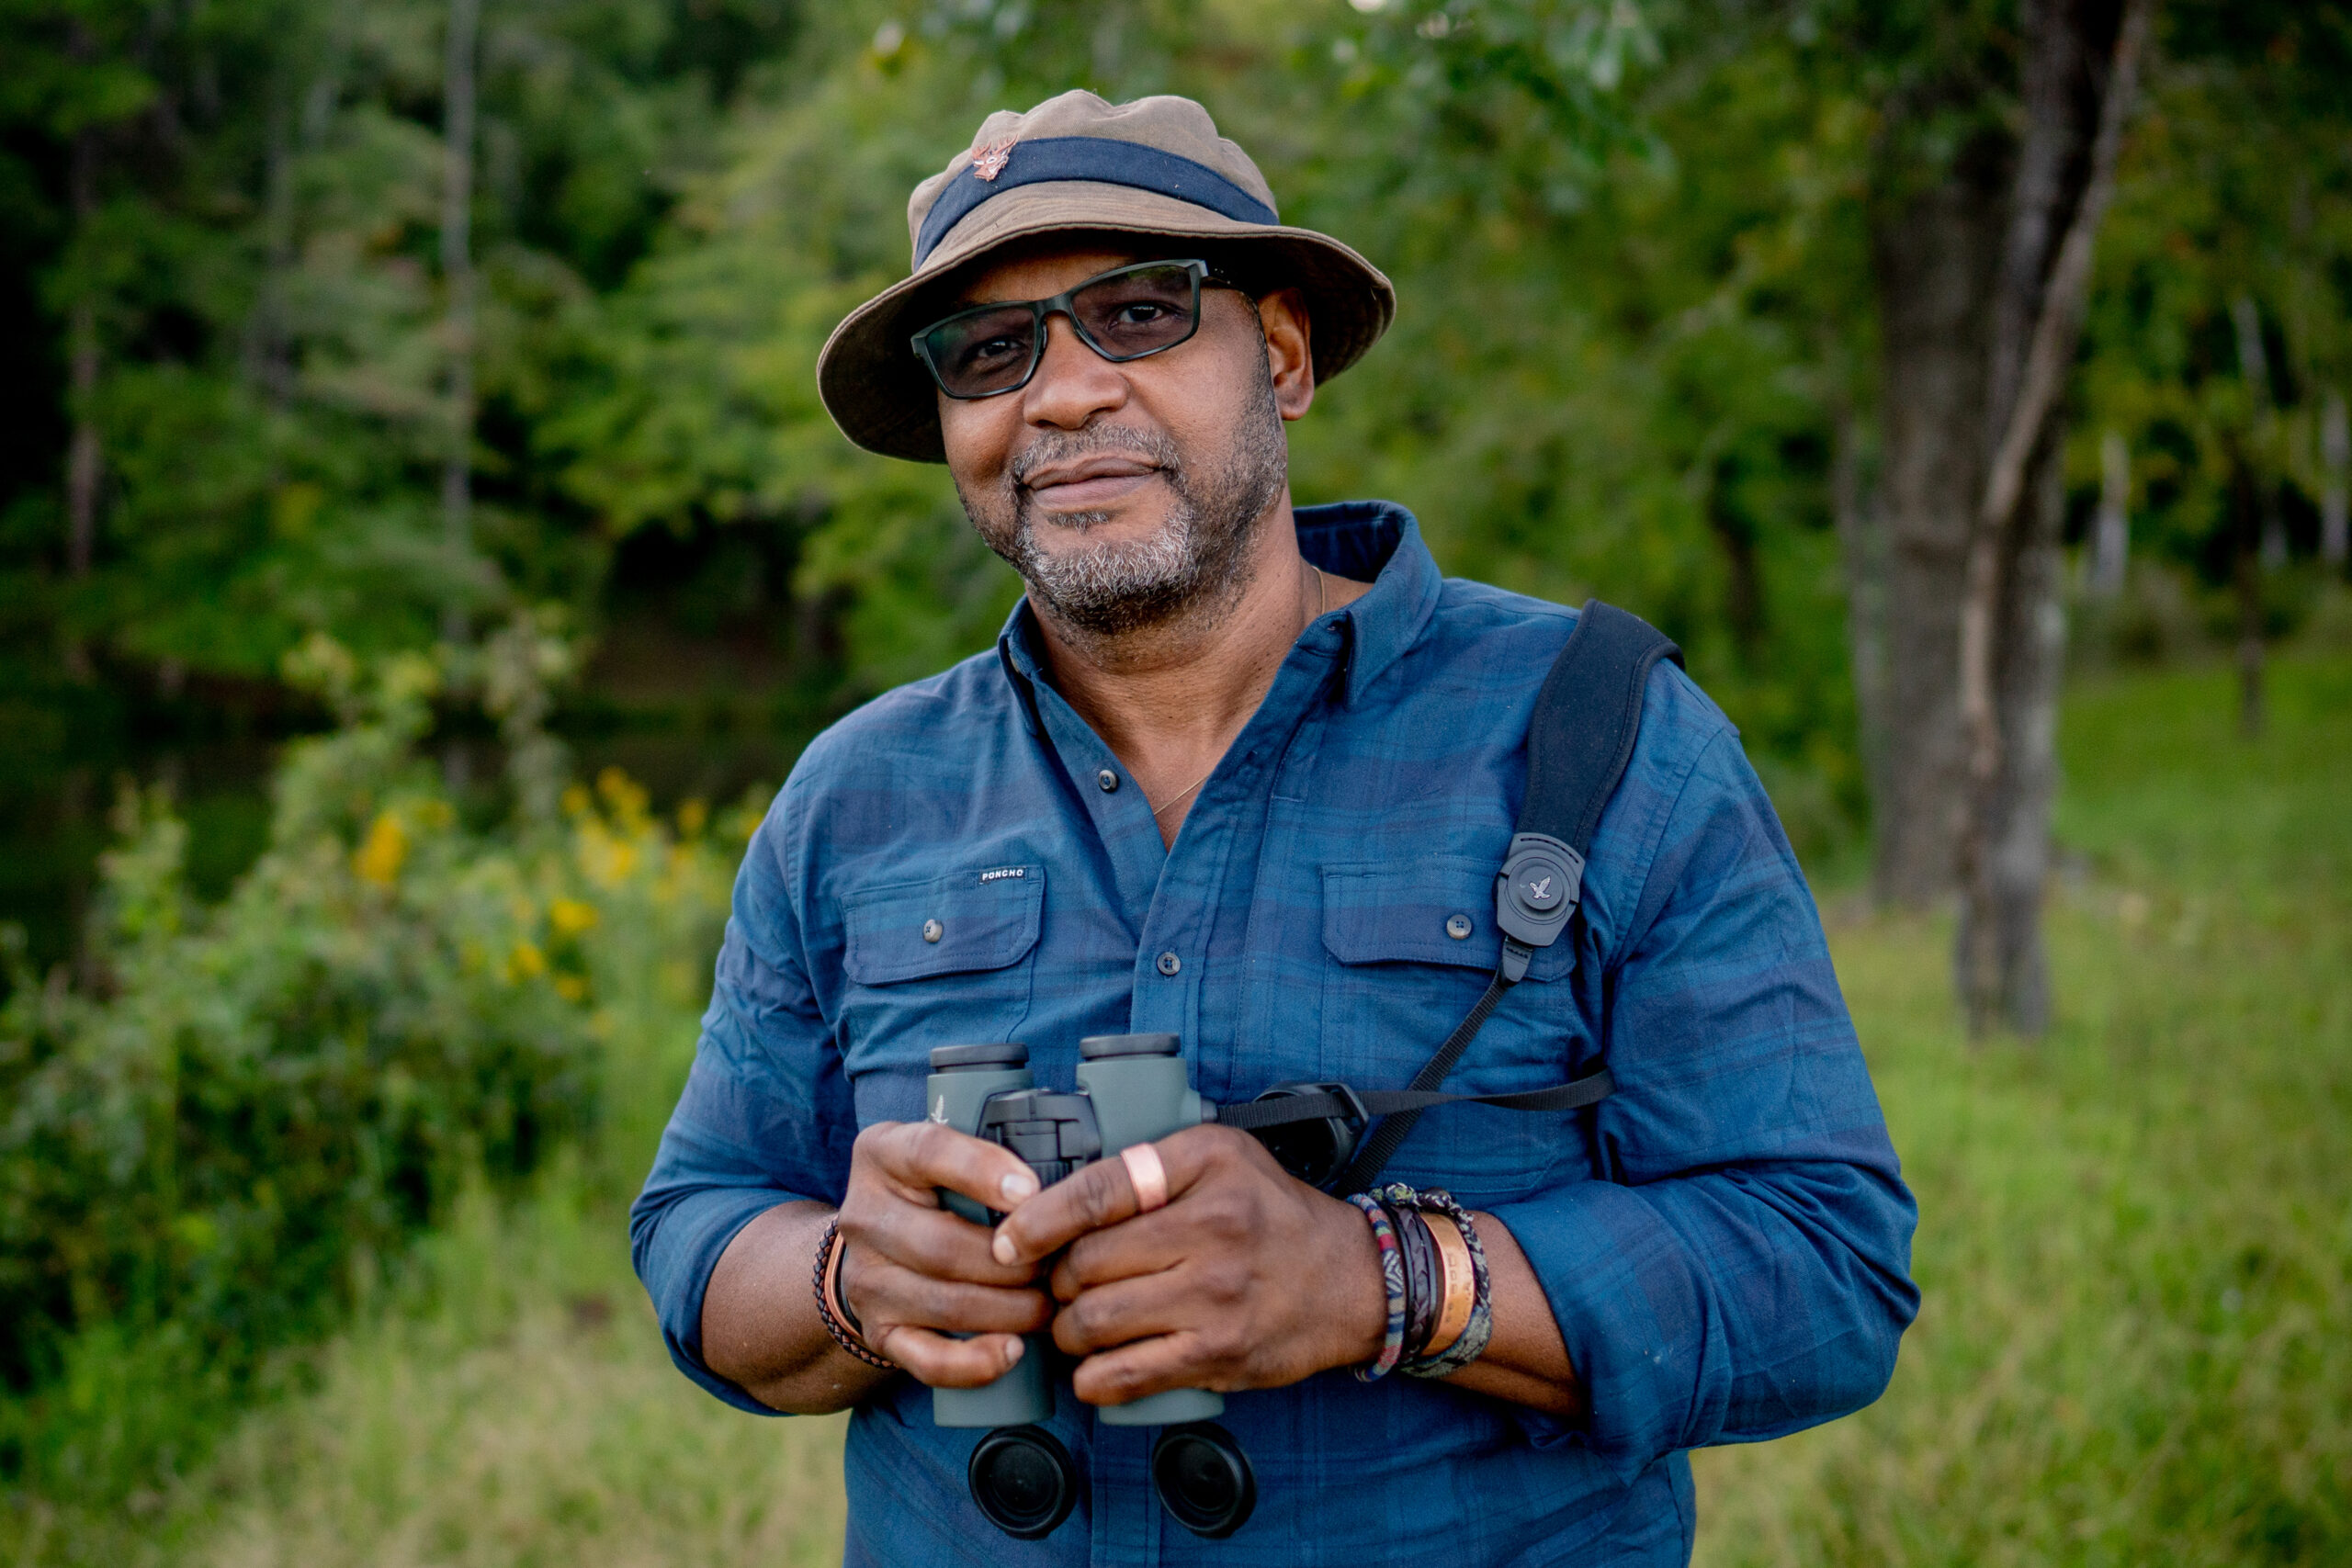 image: J. Drew Lanham poses for a photo with his binoculars.